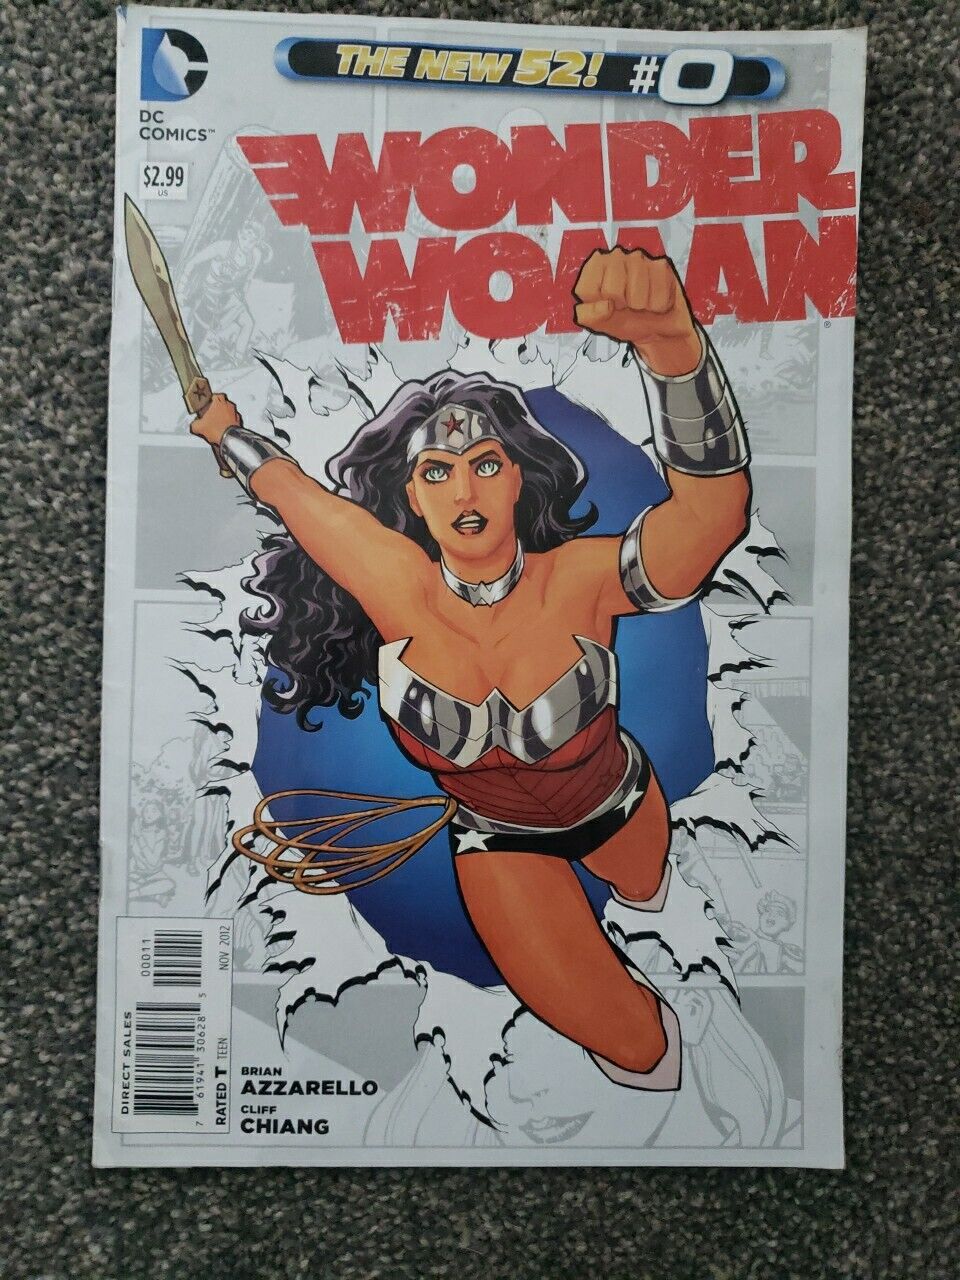 Wonder Woman #0 (DC Comics November 2012)